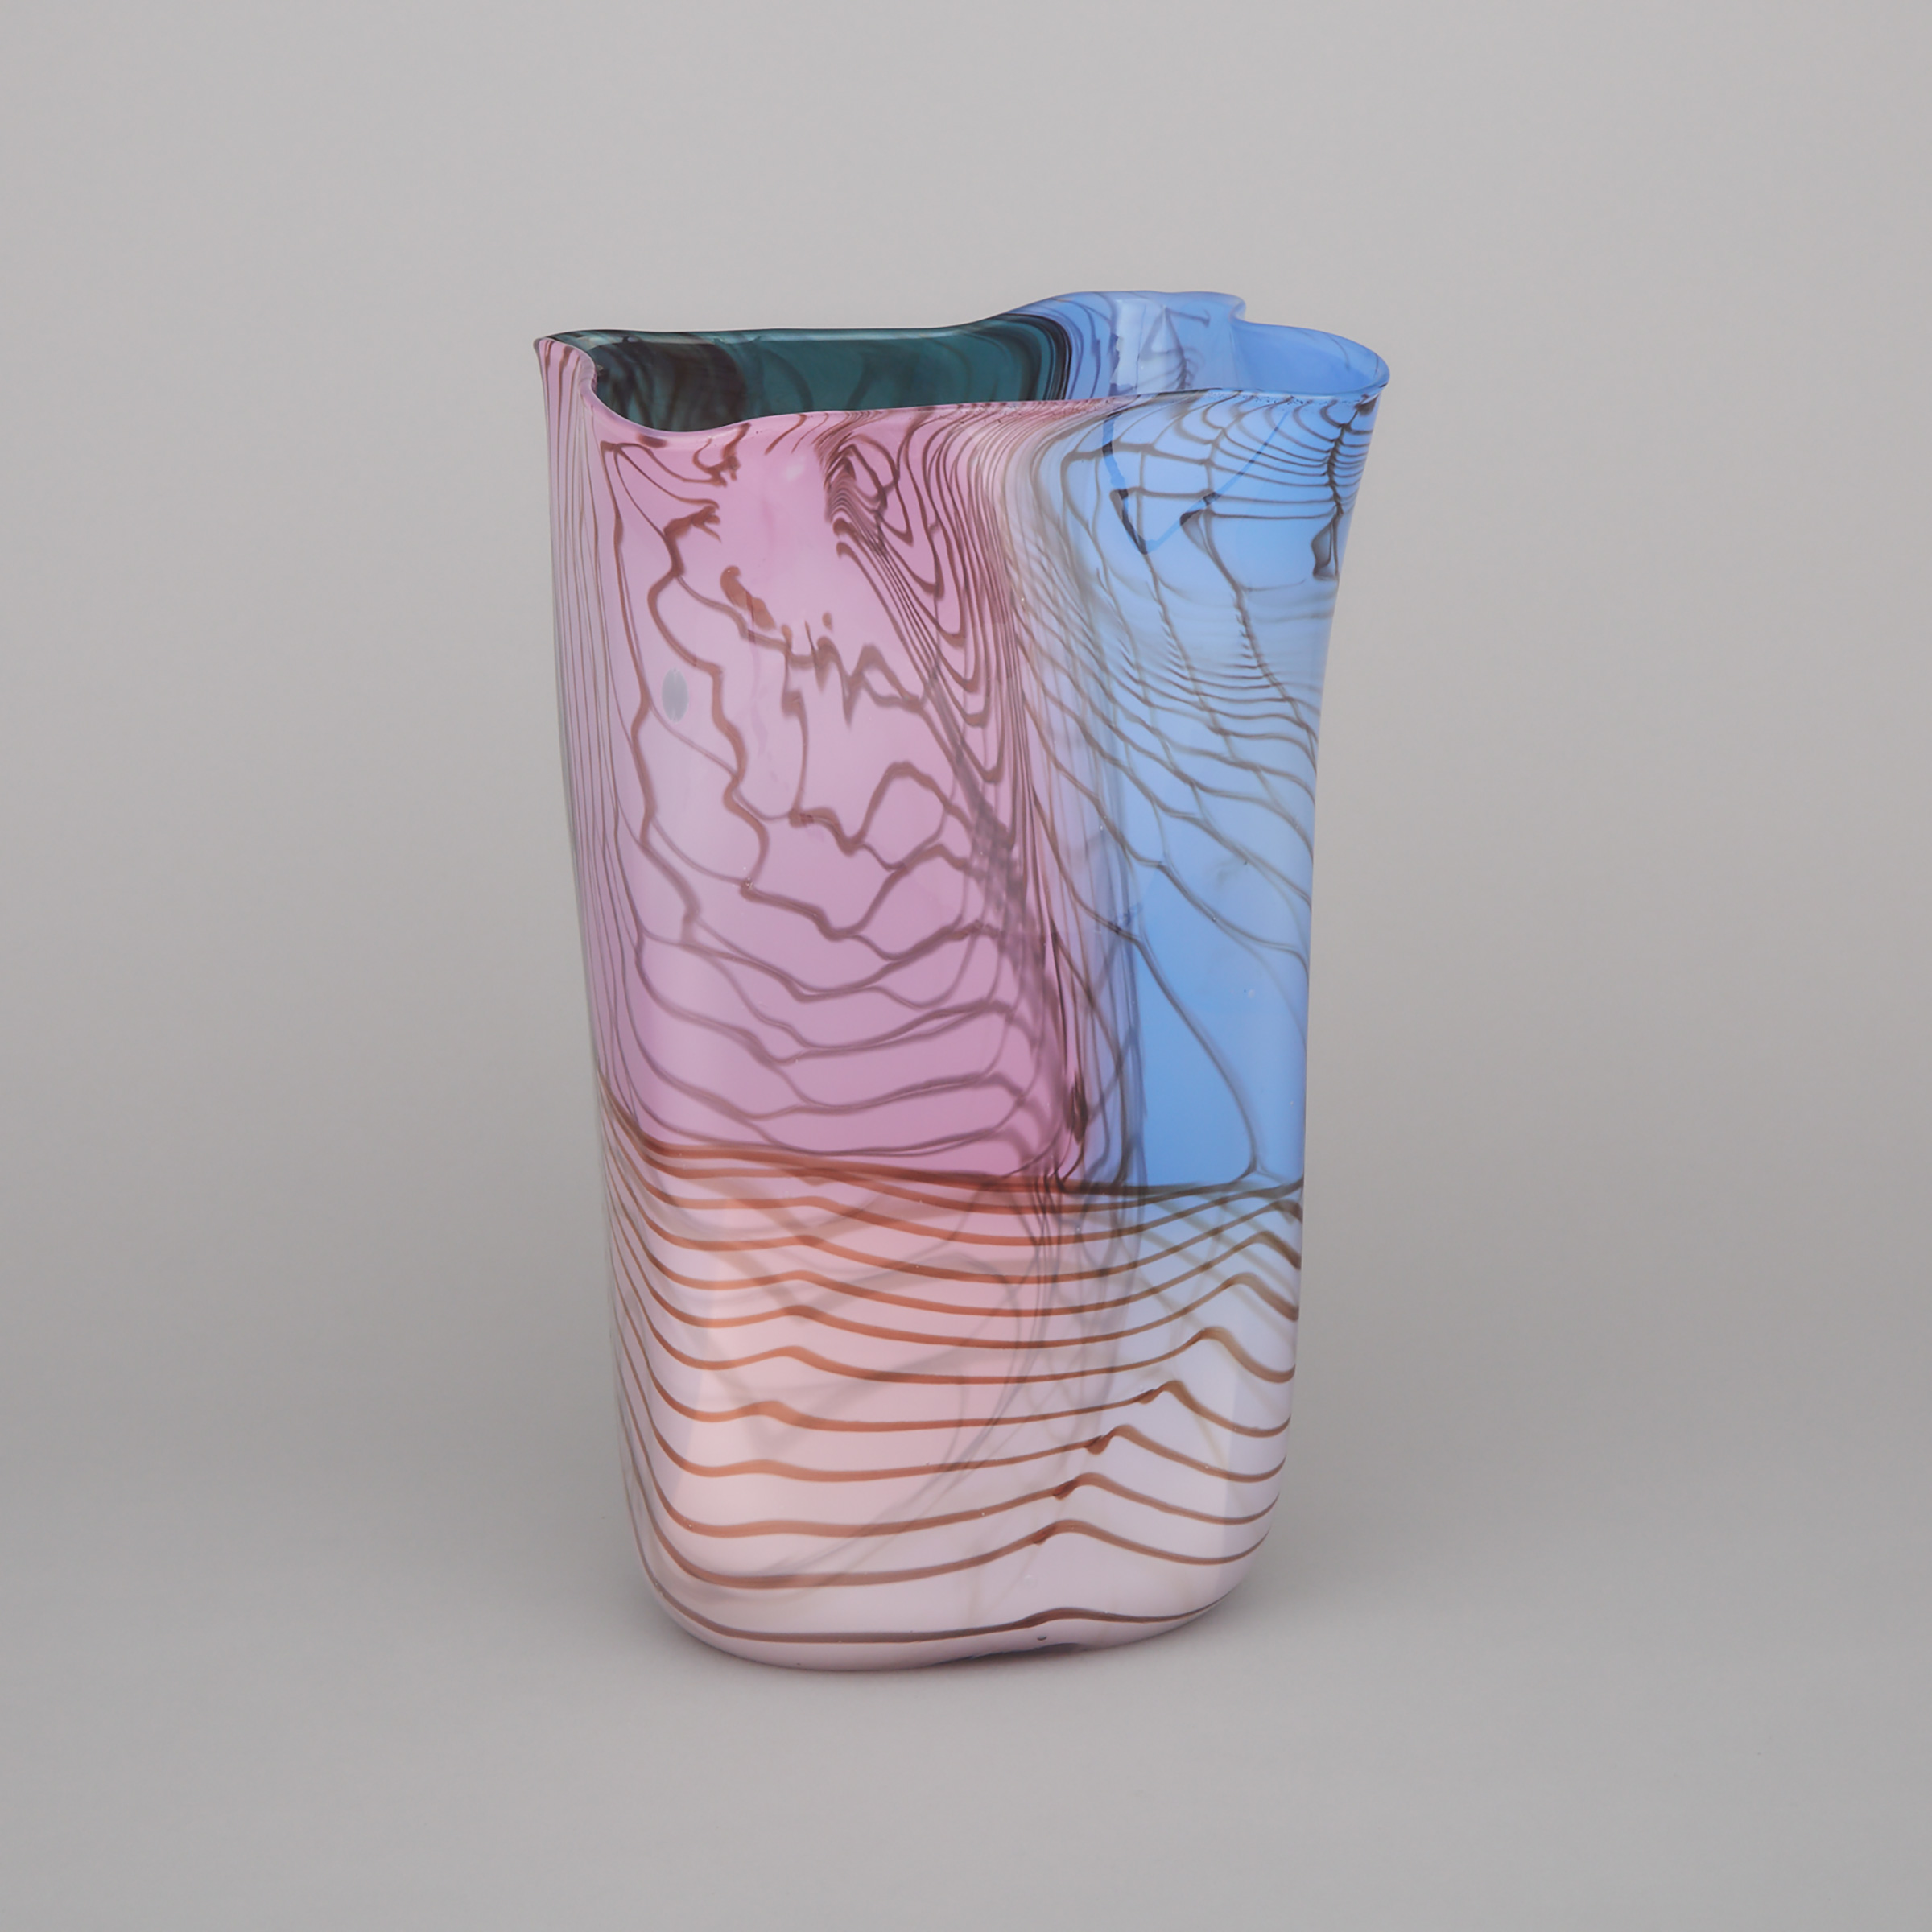 Thomas Philabaum (American, b.1947), Rectangular Glass 'Bag' Vase, 1982